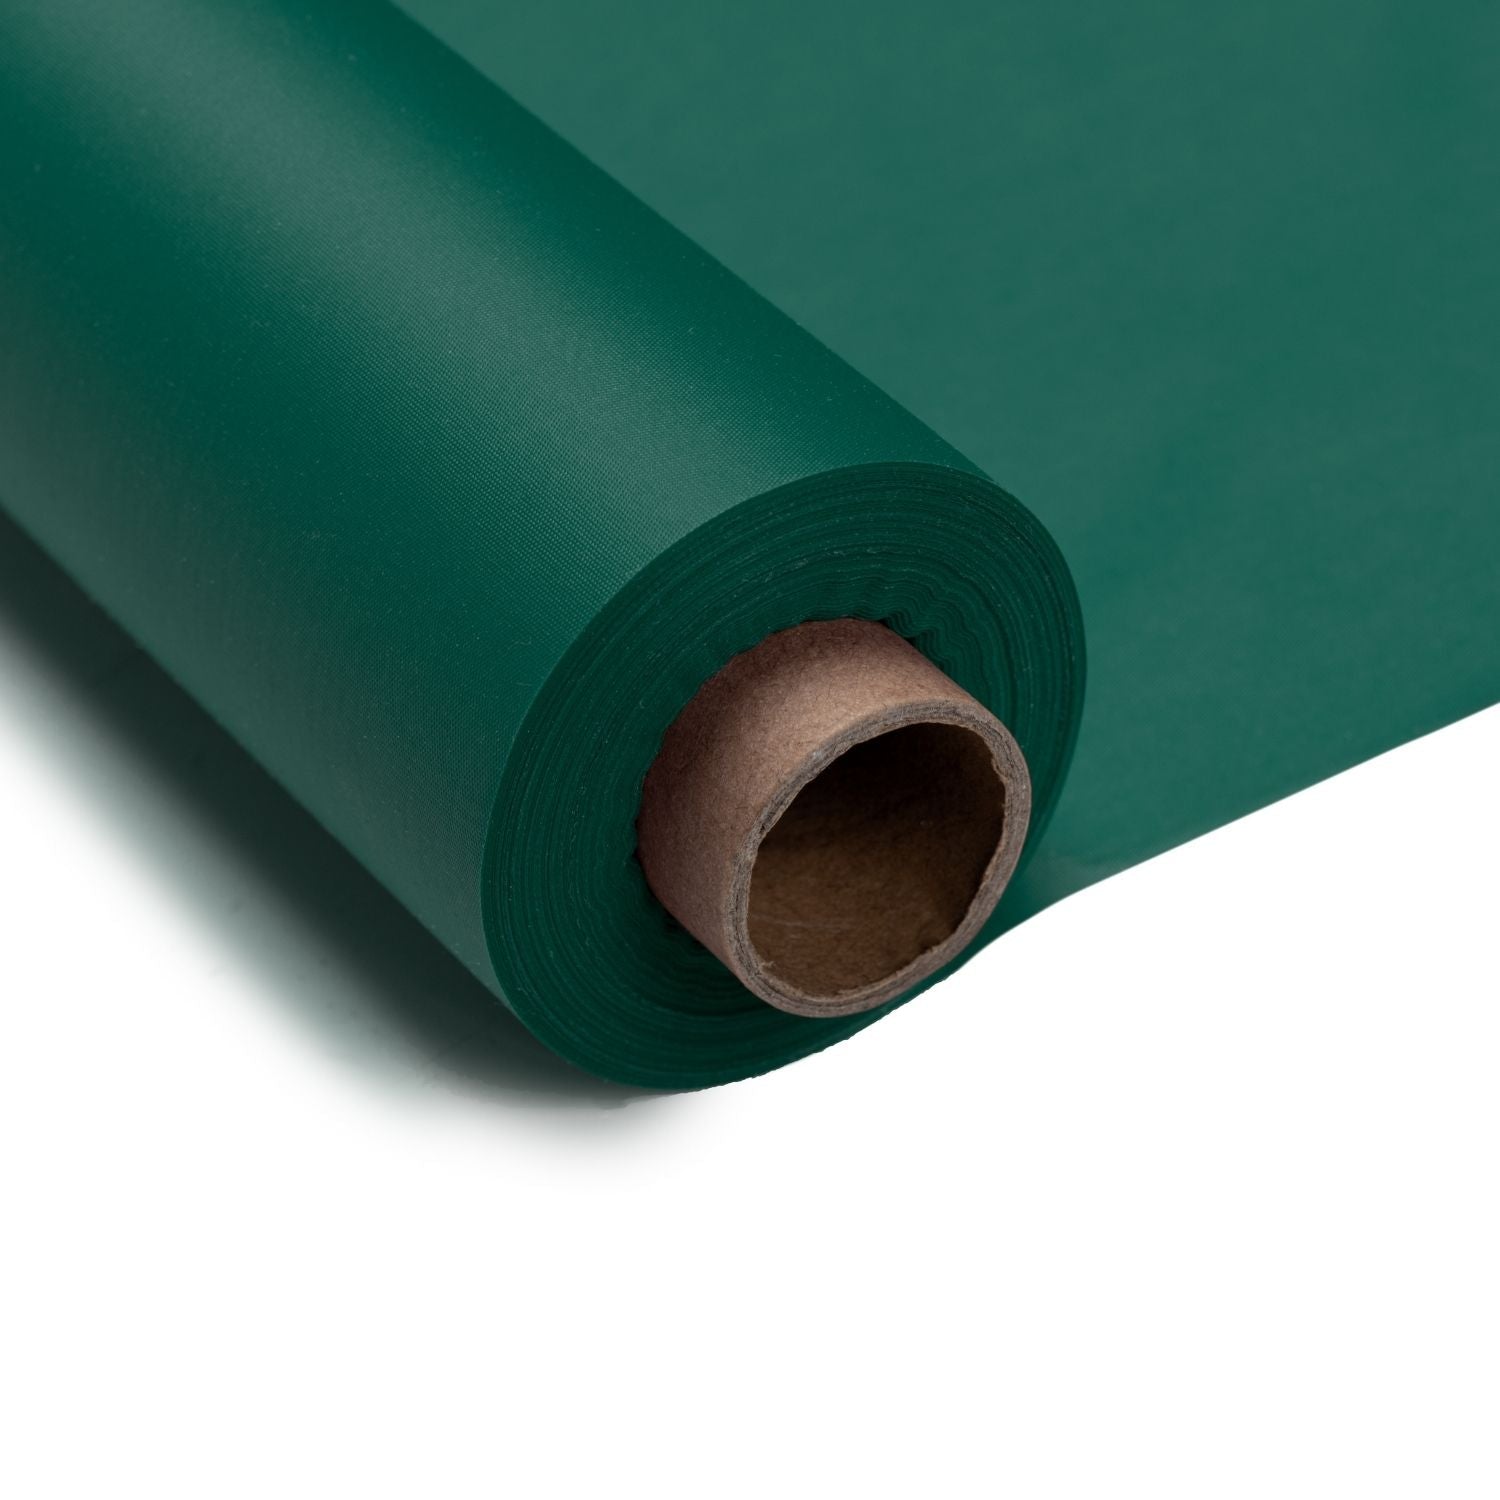 40 In. X 300 Ft. Premium Dark Green Plastic Table Roll | 4 Pack